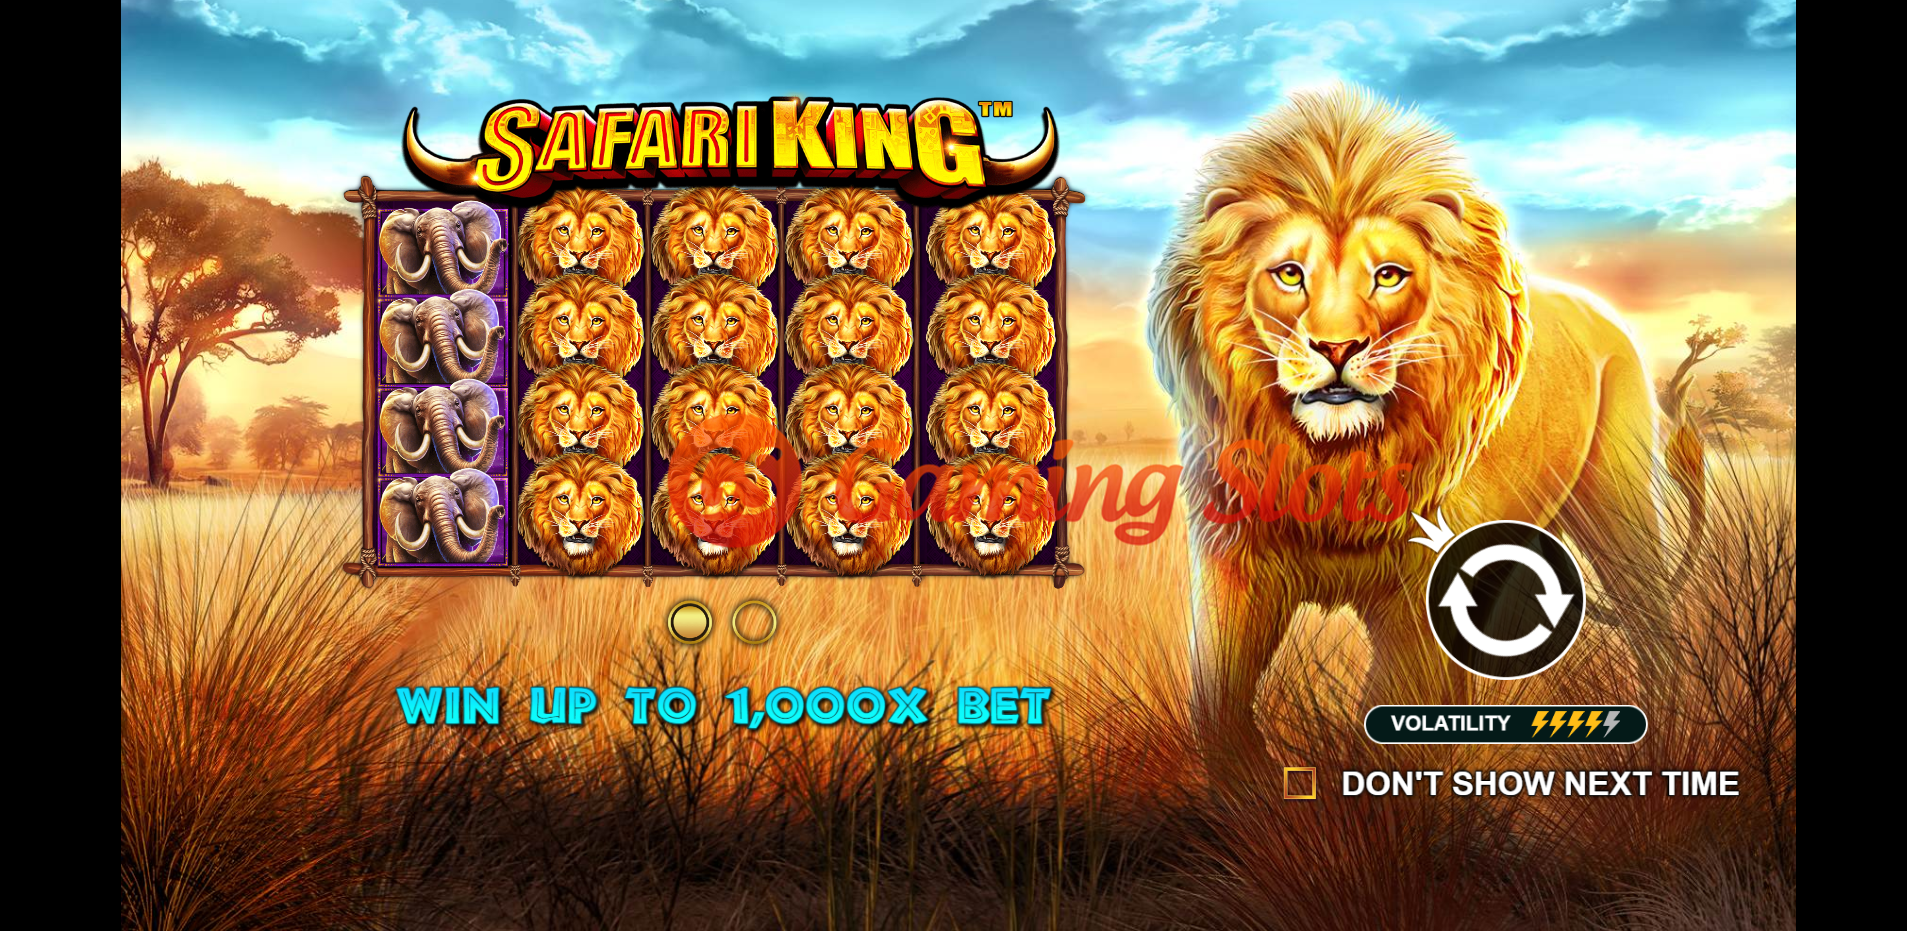 Game Intro for Safari King slot by Pragmatic Play